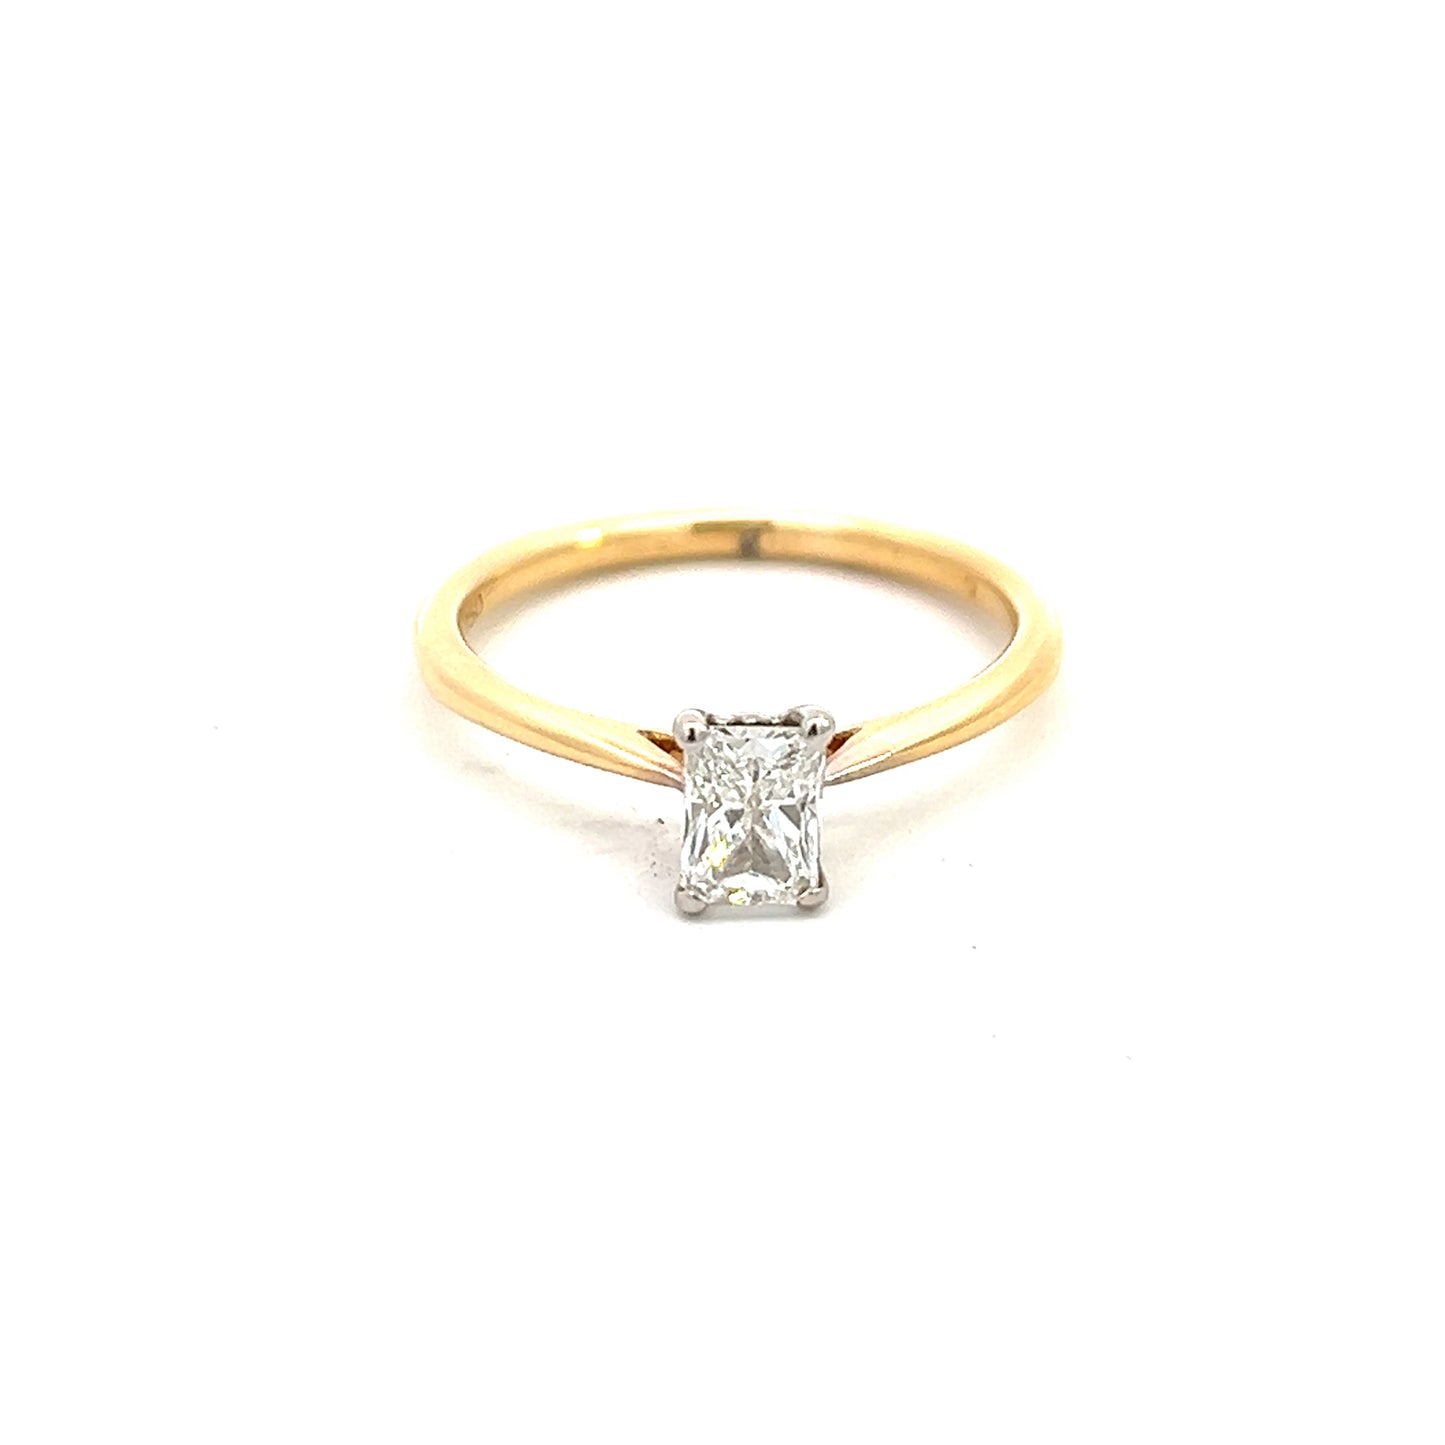 18ct Yellow Gold 0.51ct Radiant Cut Diamond Ring Size M